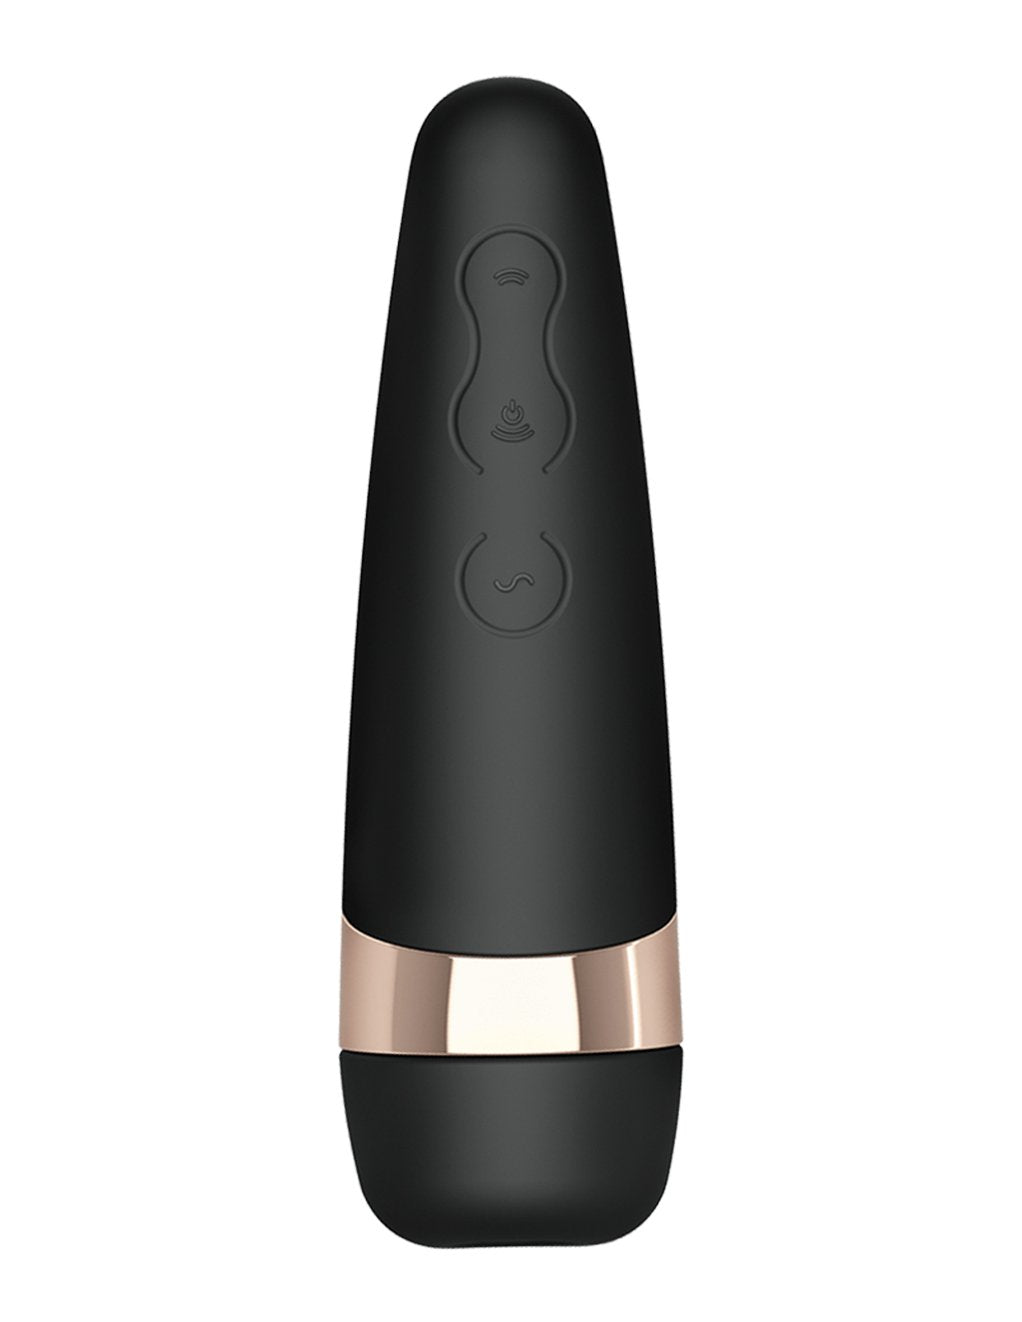 Satisfyer Pro 3 Plus Clitoral Vibrator- Black- Front